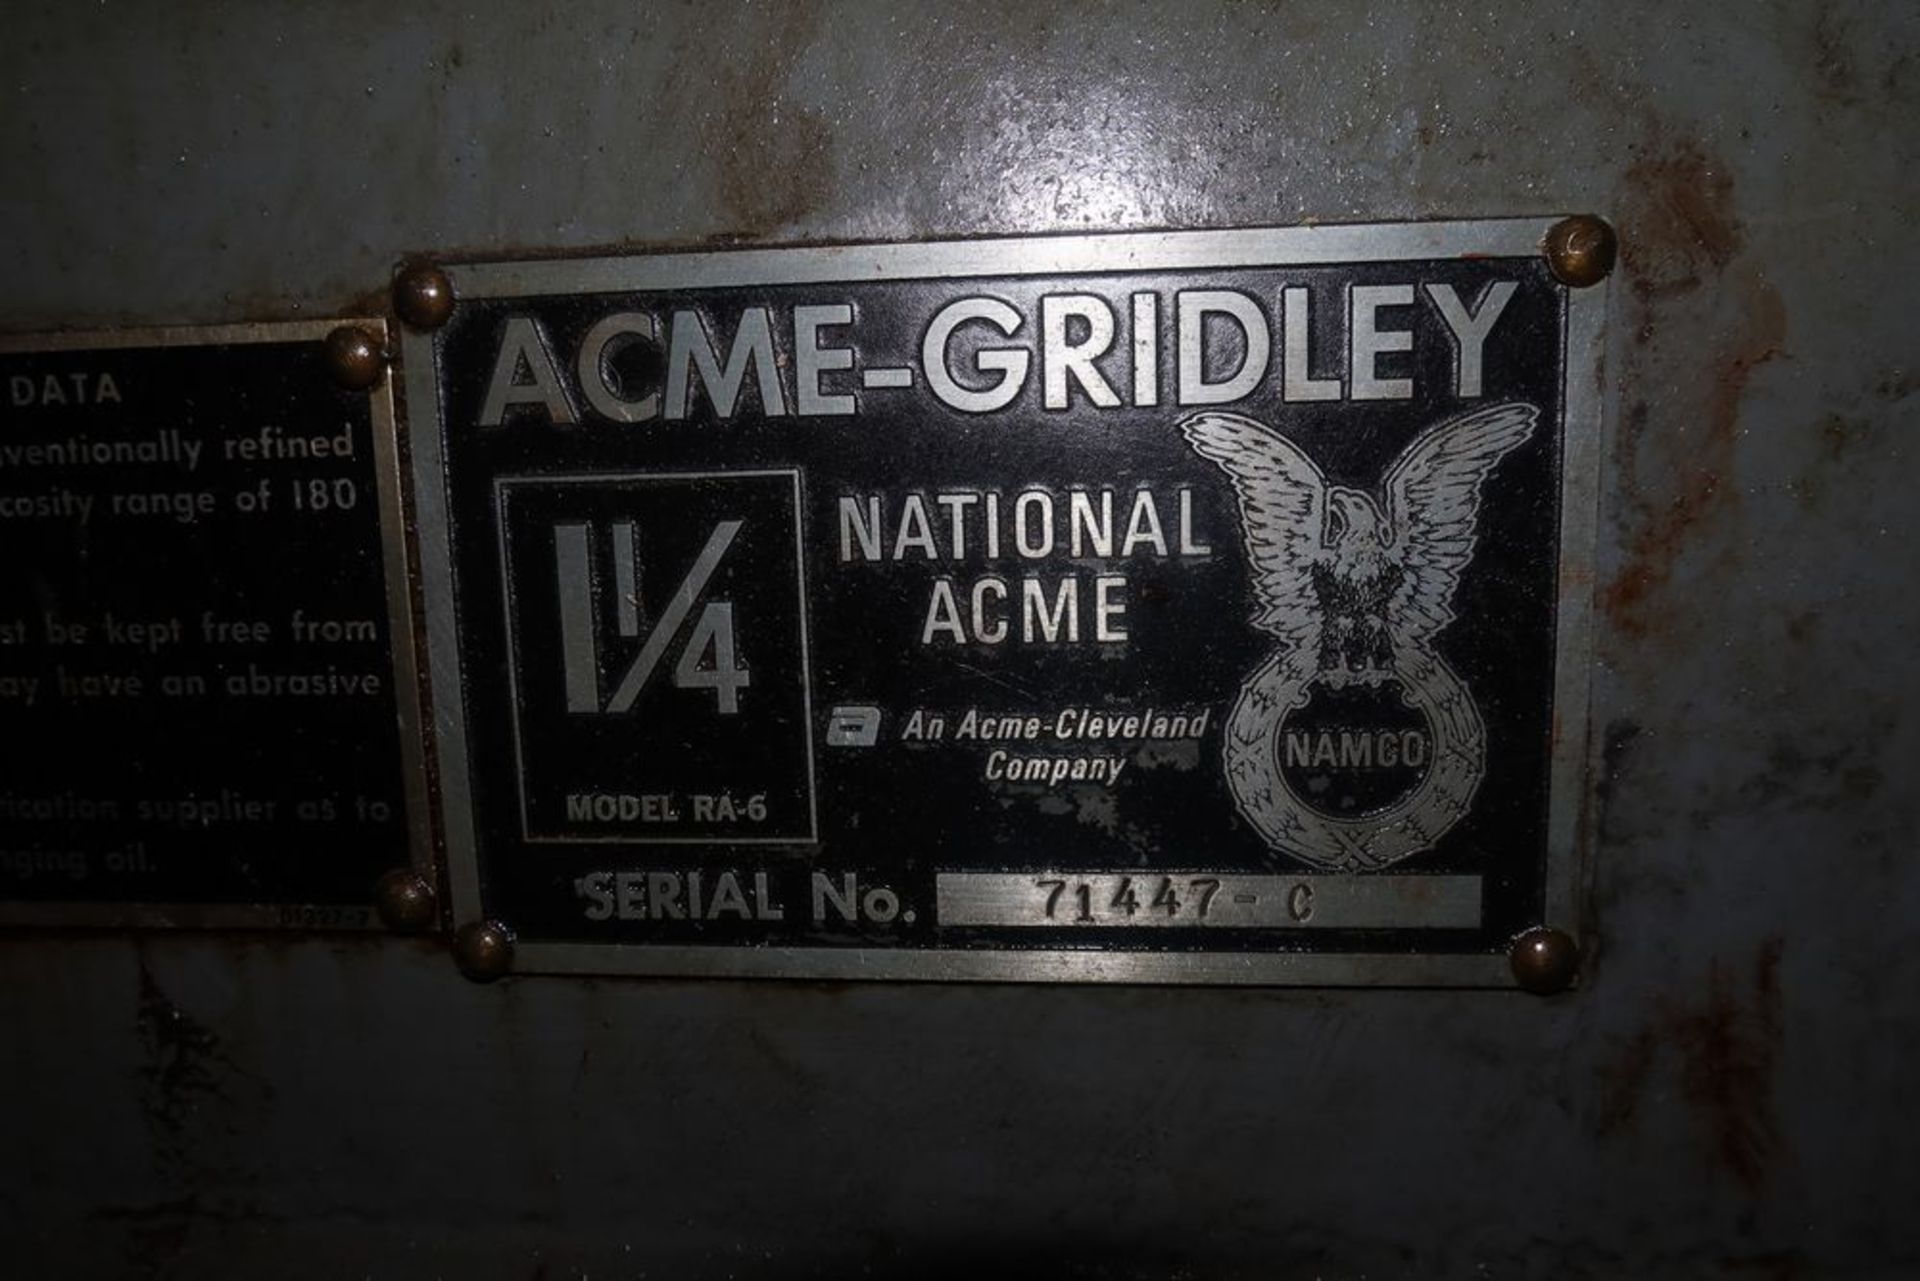 ACME GRIDLEY 1-1/4" RA-6 SCREW MACHINE, S/N 71447-C (MACHINE #8) - Image 5 of 7